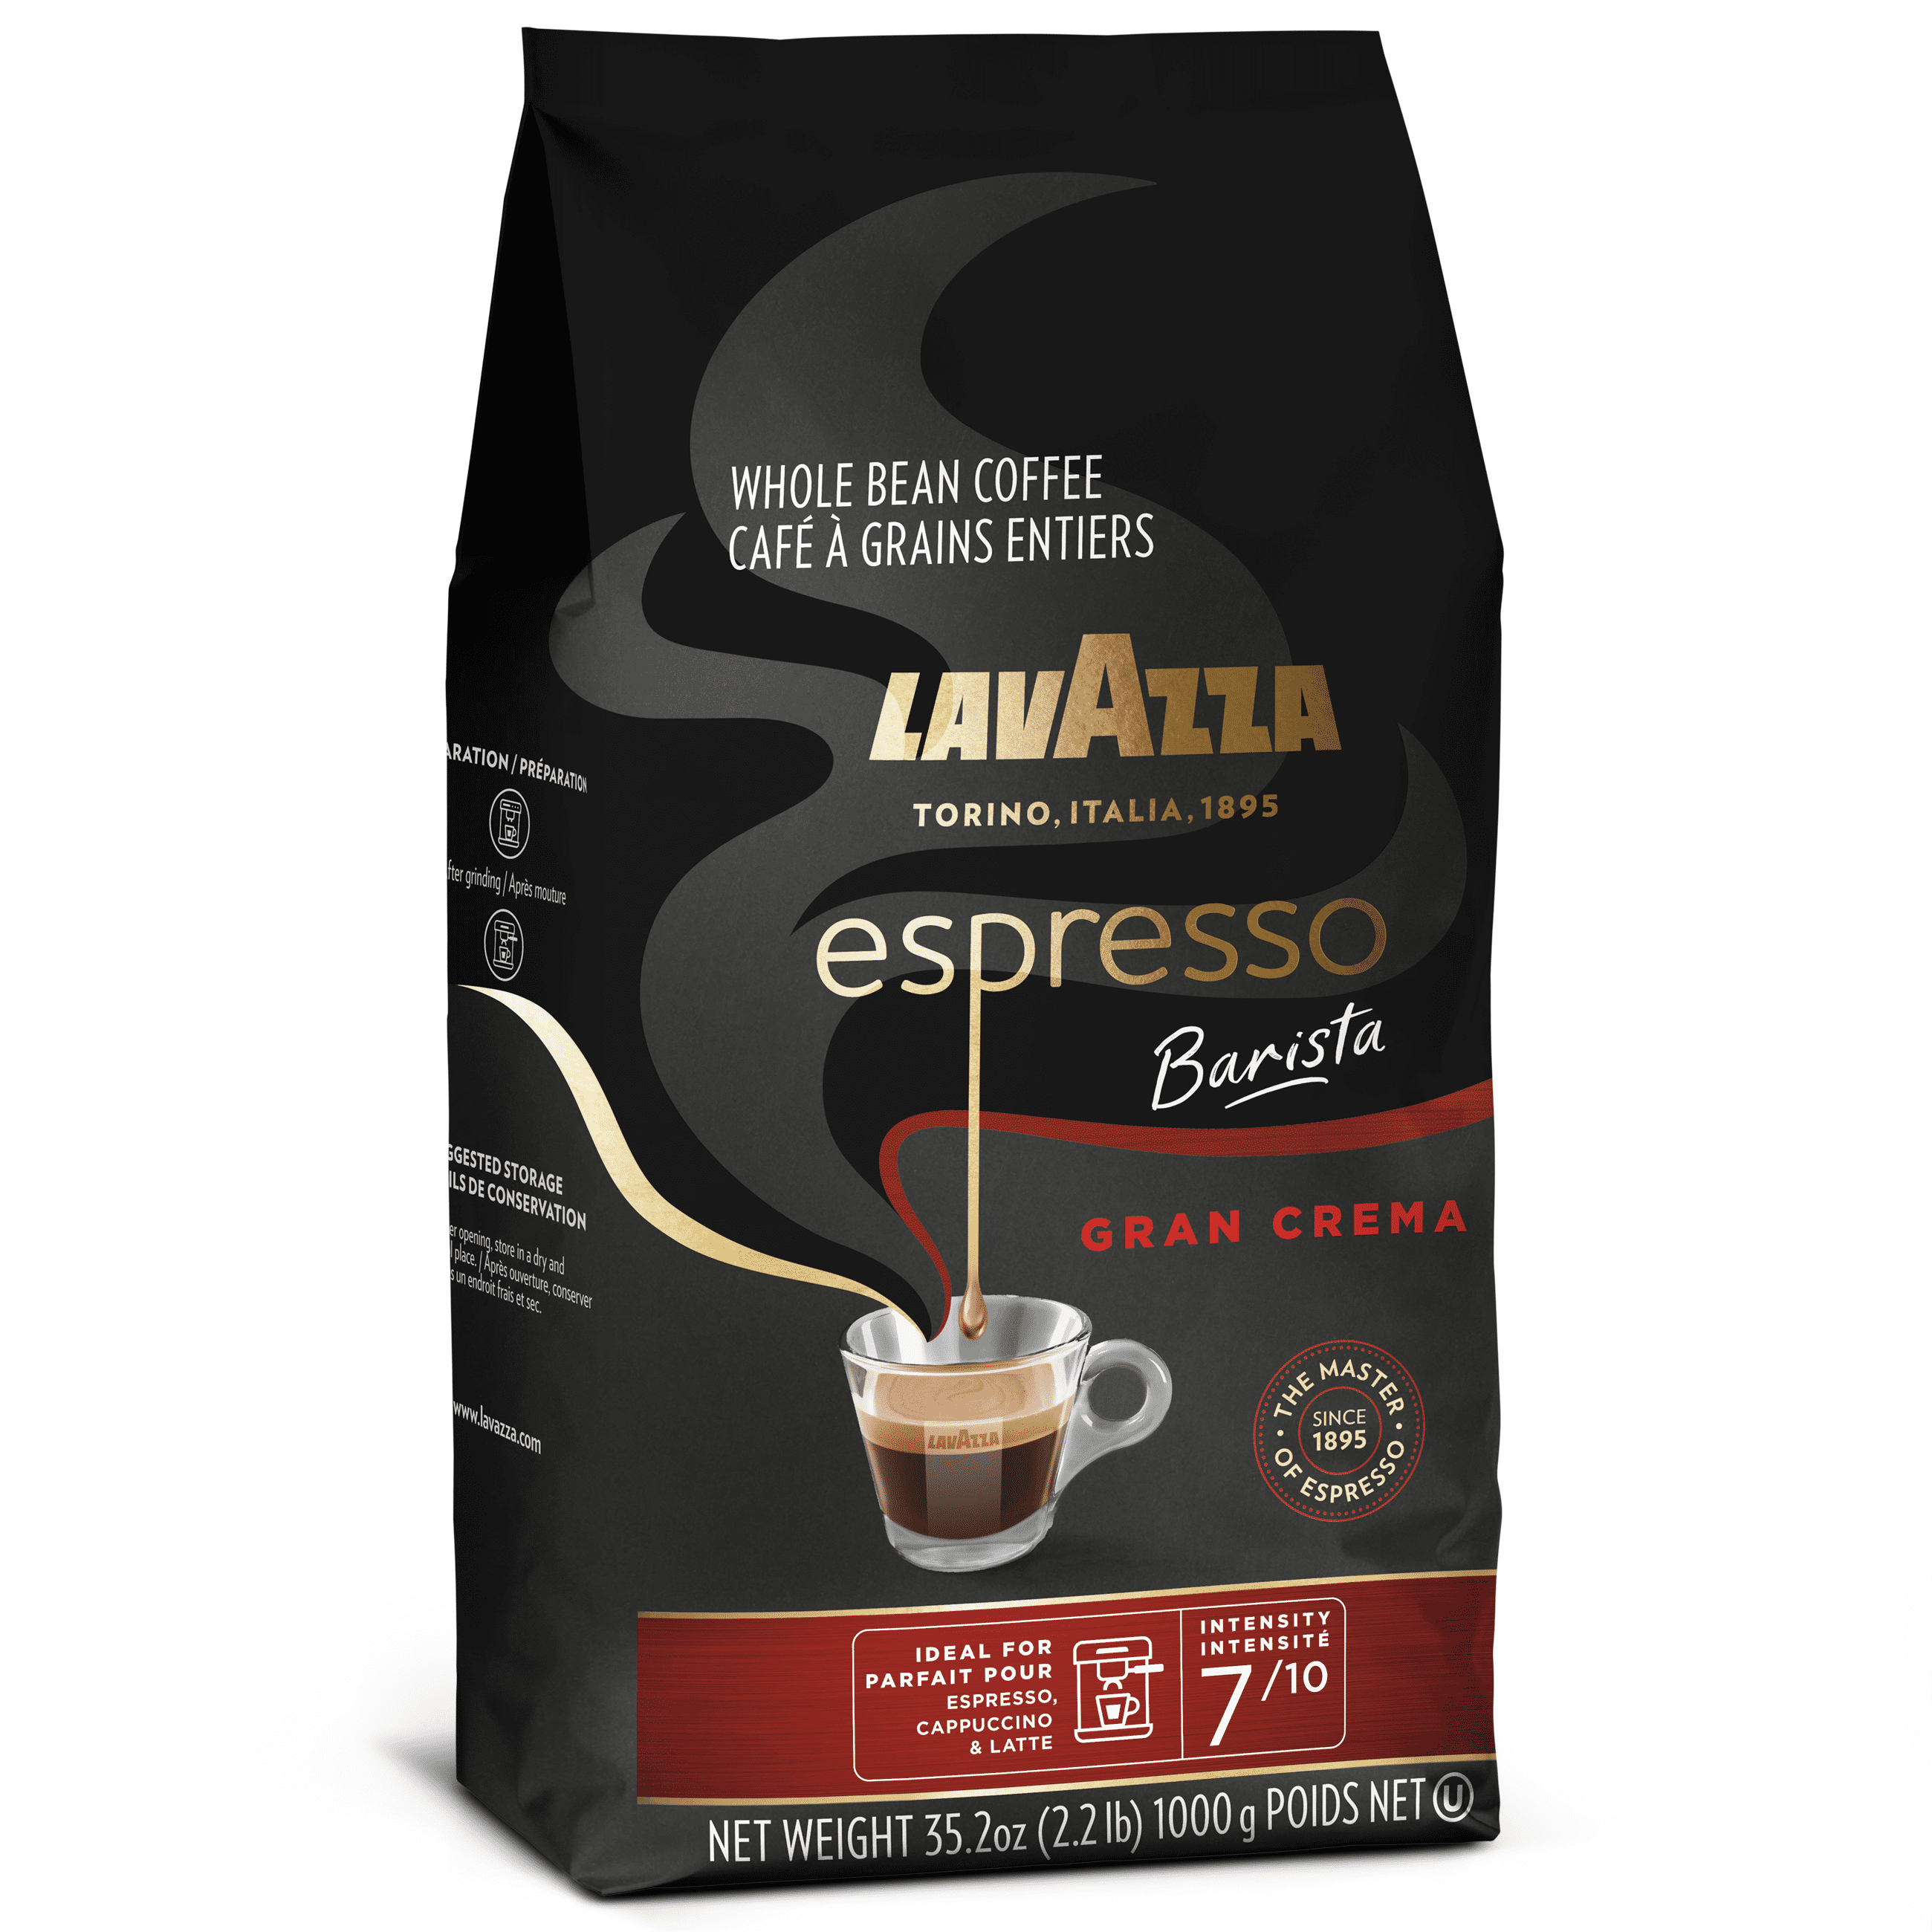 Gran crema. Lavazza Coffee Gran Espresso v zernax 1000gr. Espresso Barista кофе в зернах 1000г. Кофе в зернах Lavazza "Gran Espresso", 1000 г, 2134. Lavazza Gran crema (Гран крема) - кофе в чалдах.